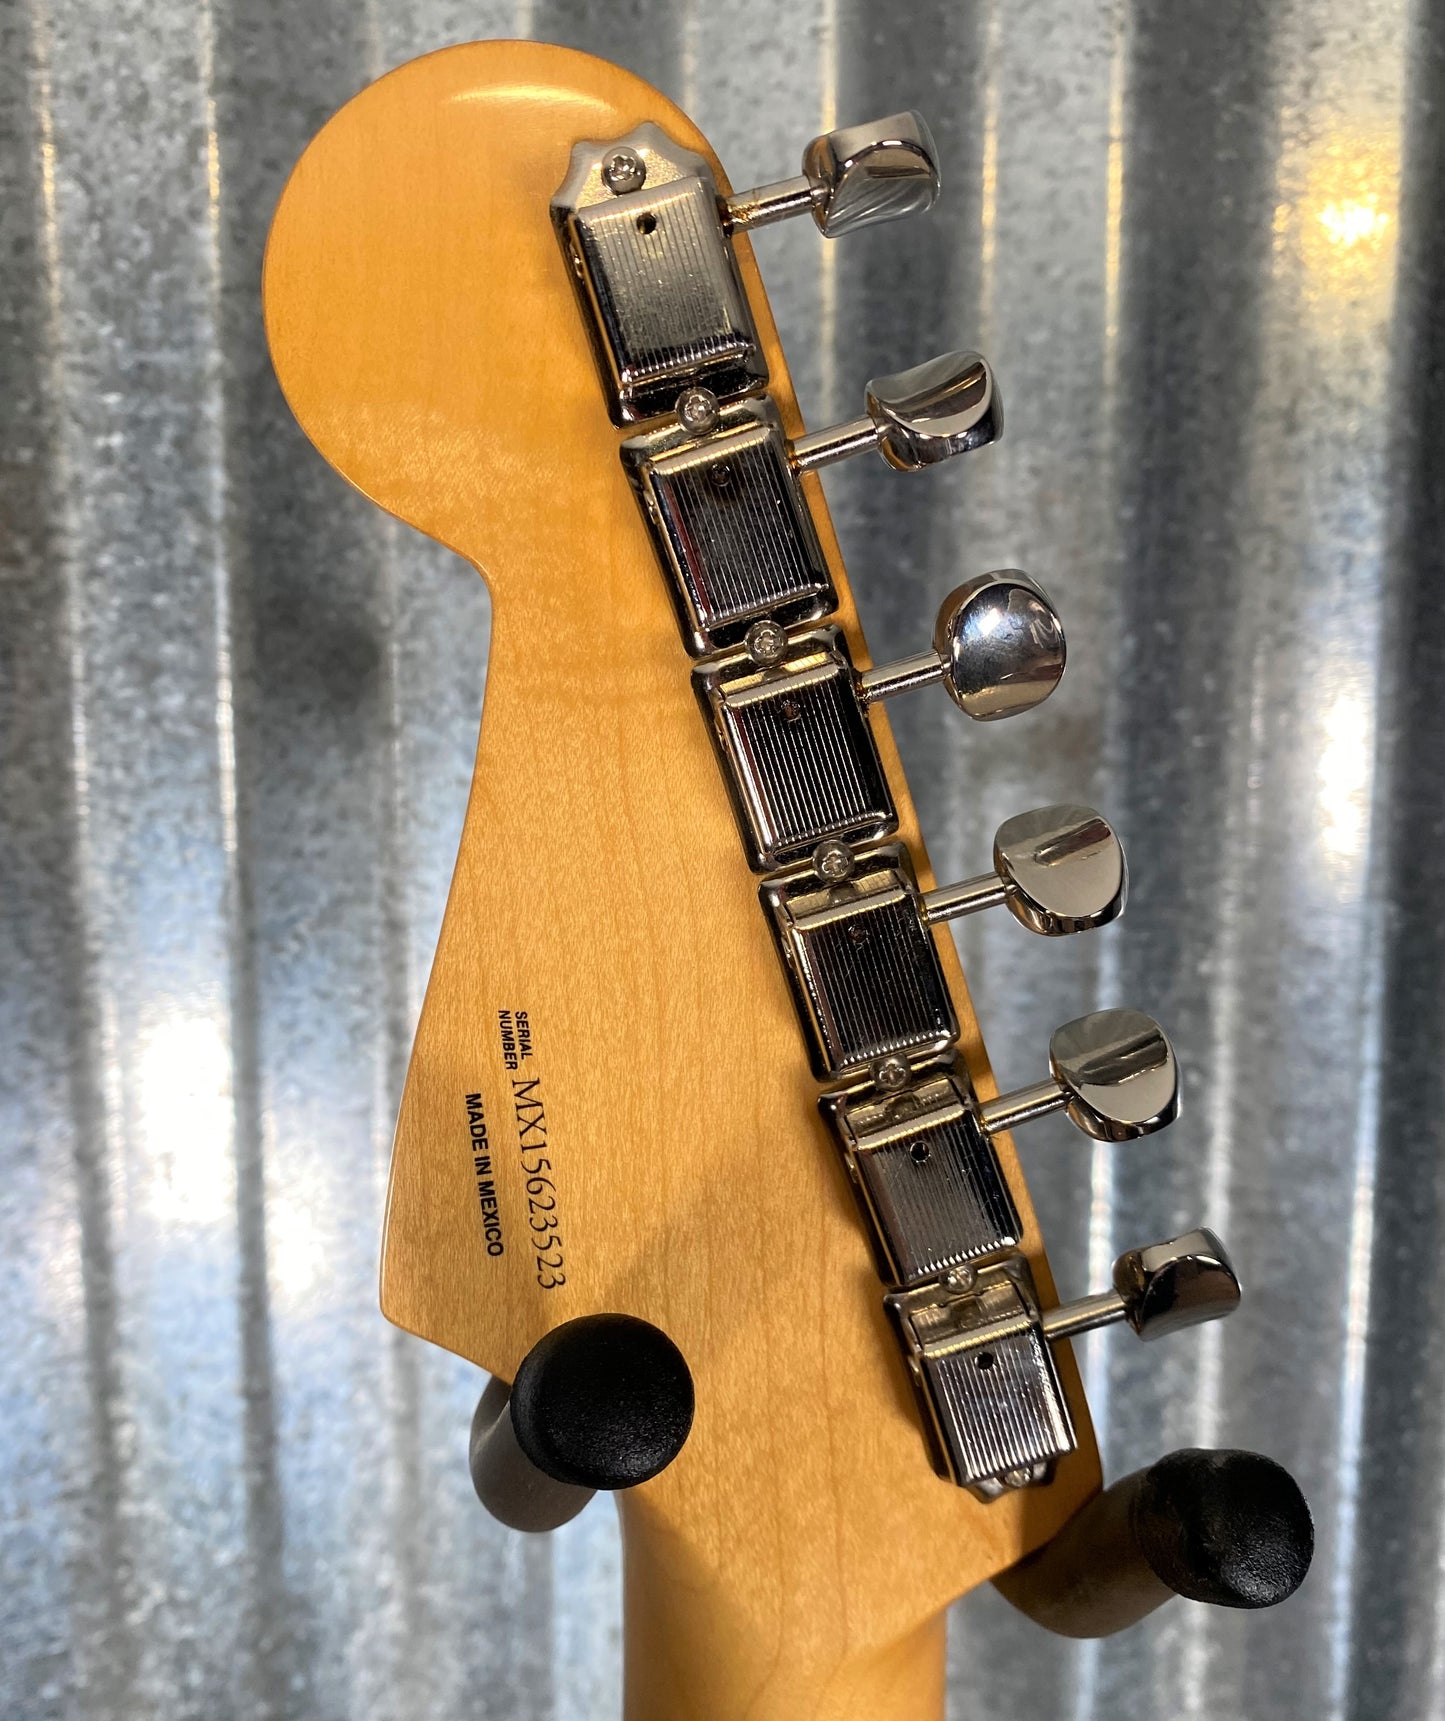 Fender Classic Series '60s Stratocaster 3 Tone Sunburst Guitar & Case #3523 Used